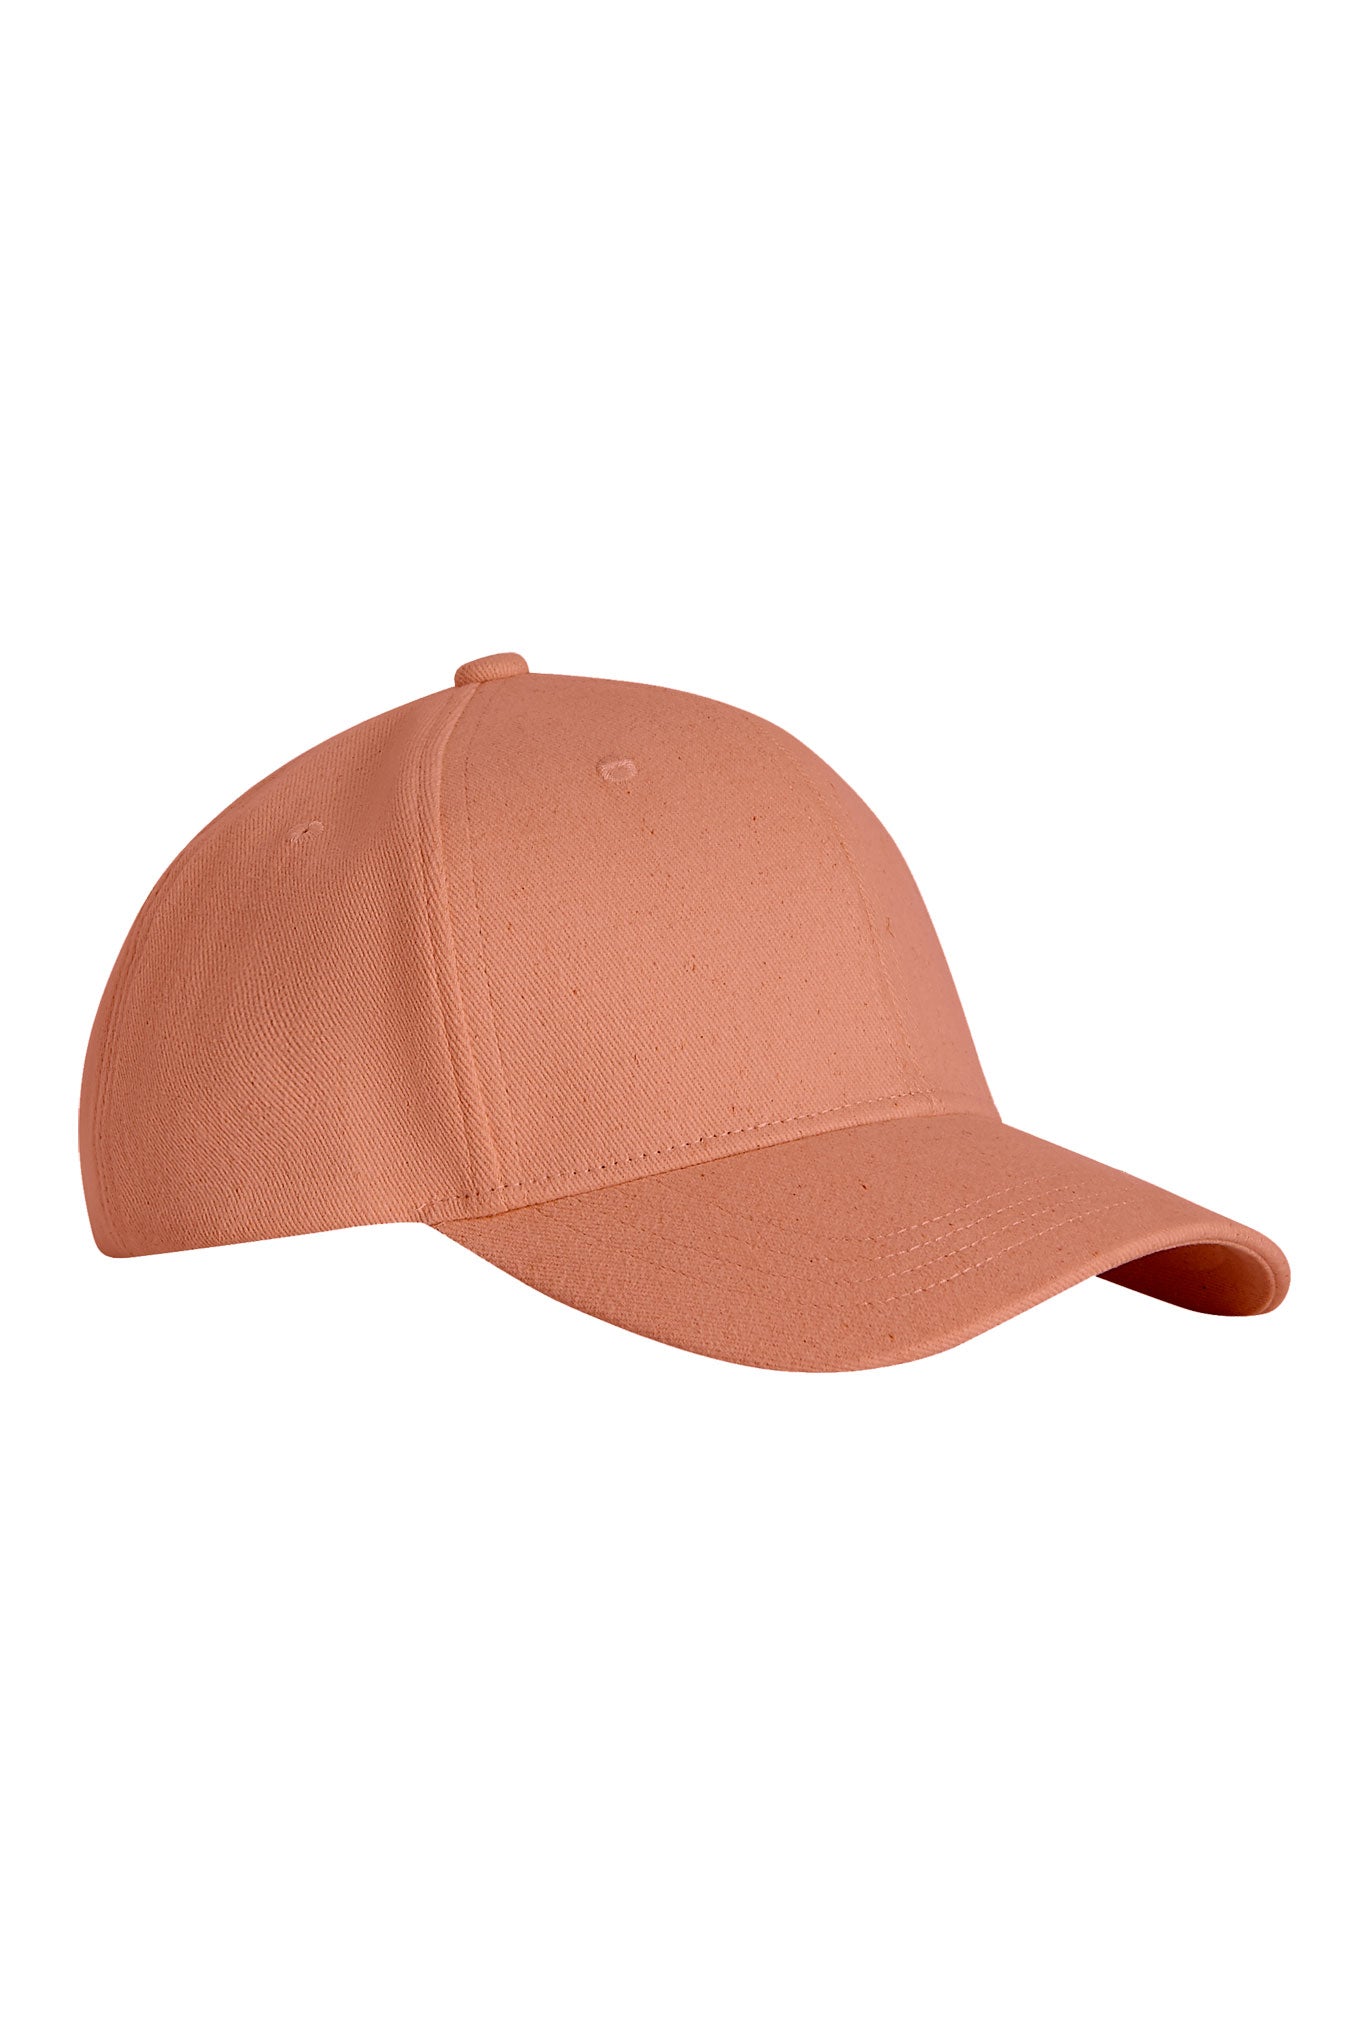 Hat - ROCKY Organic Cotton Cap Pink